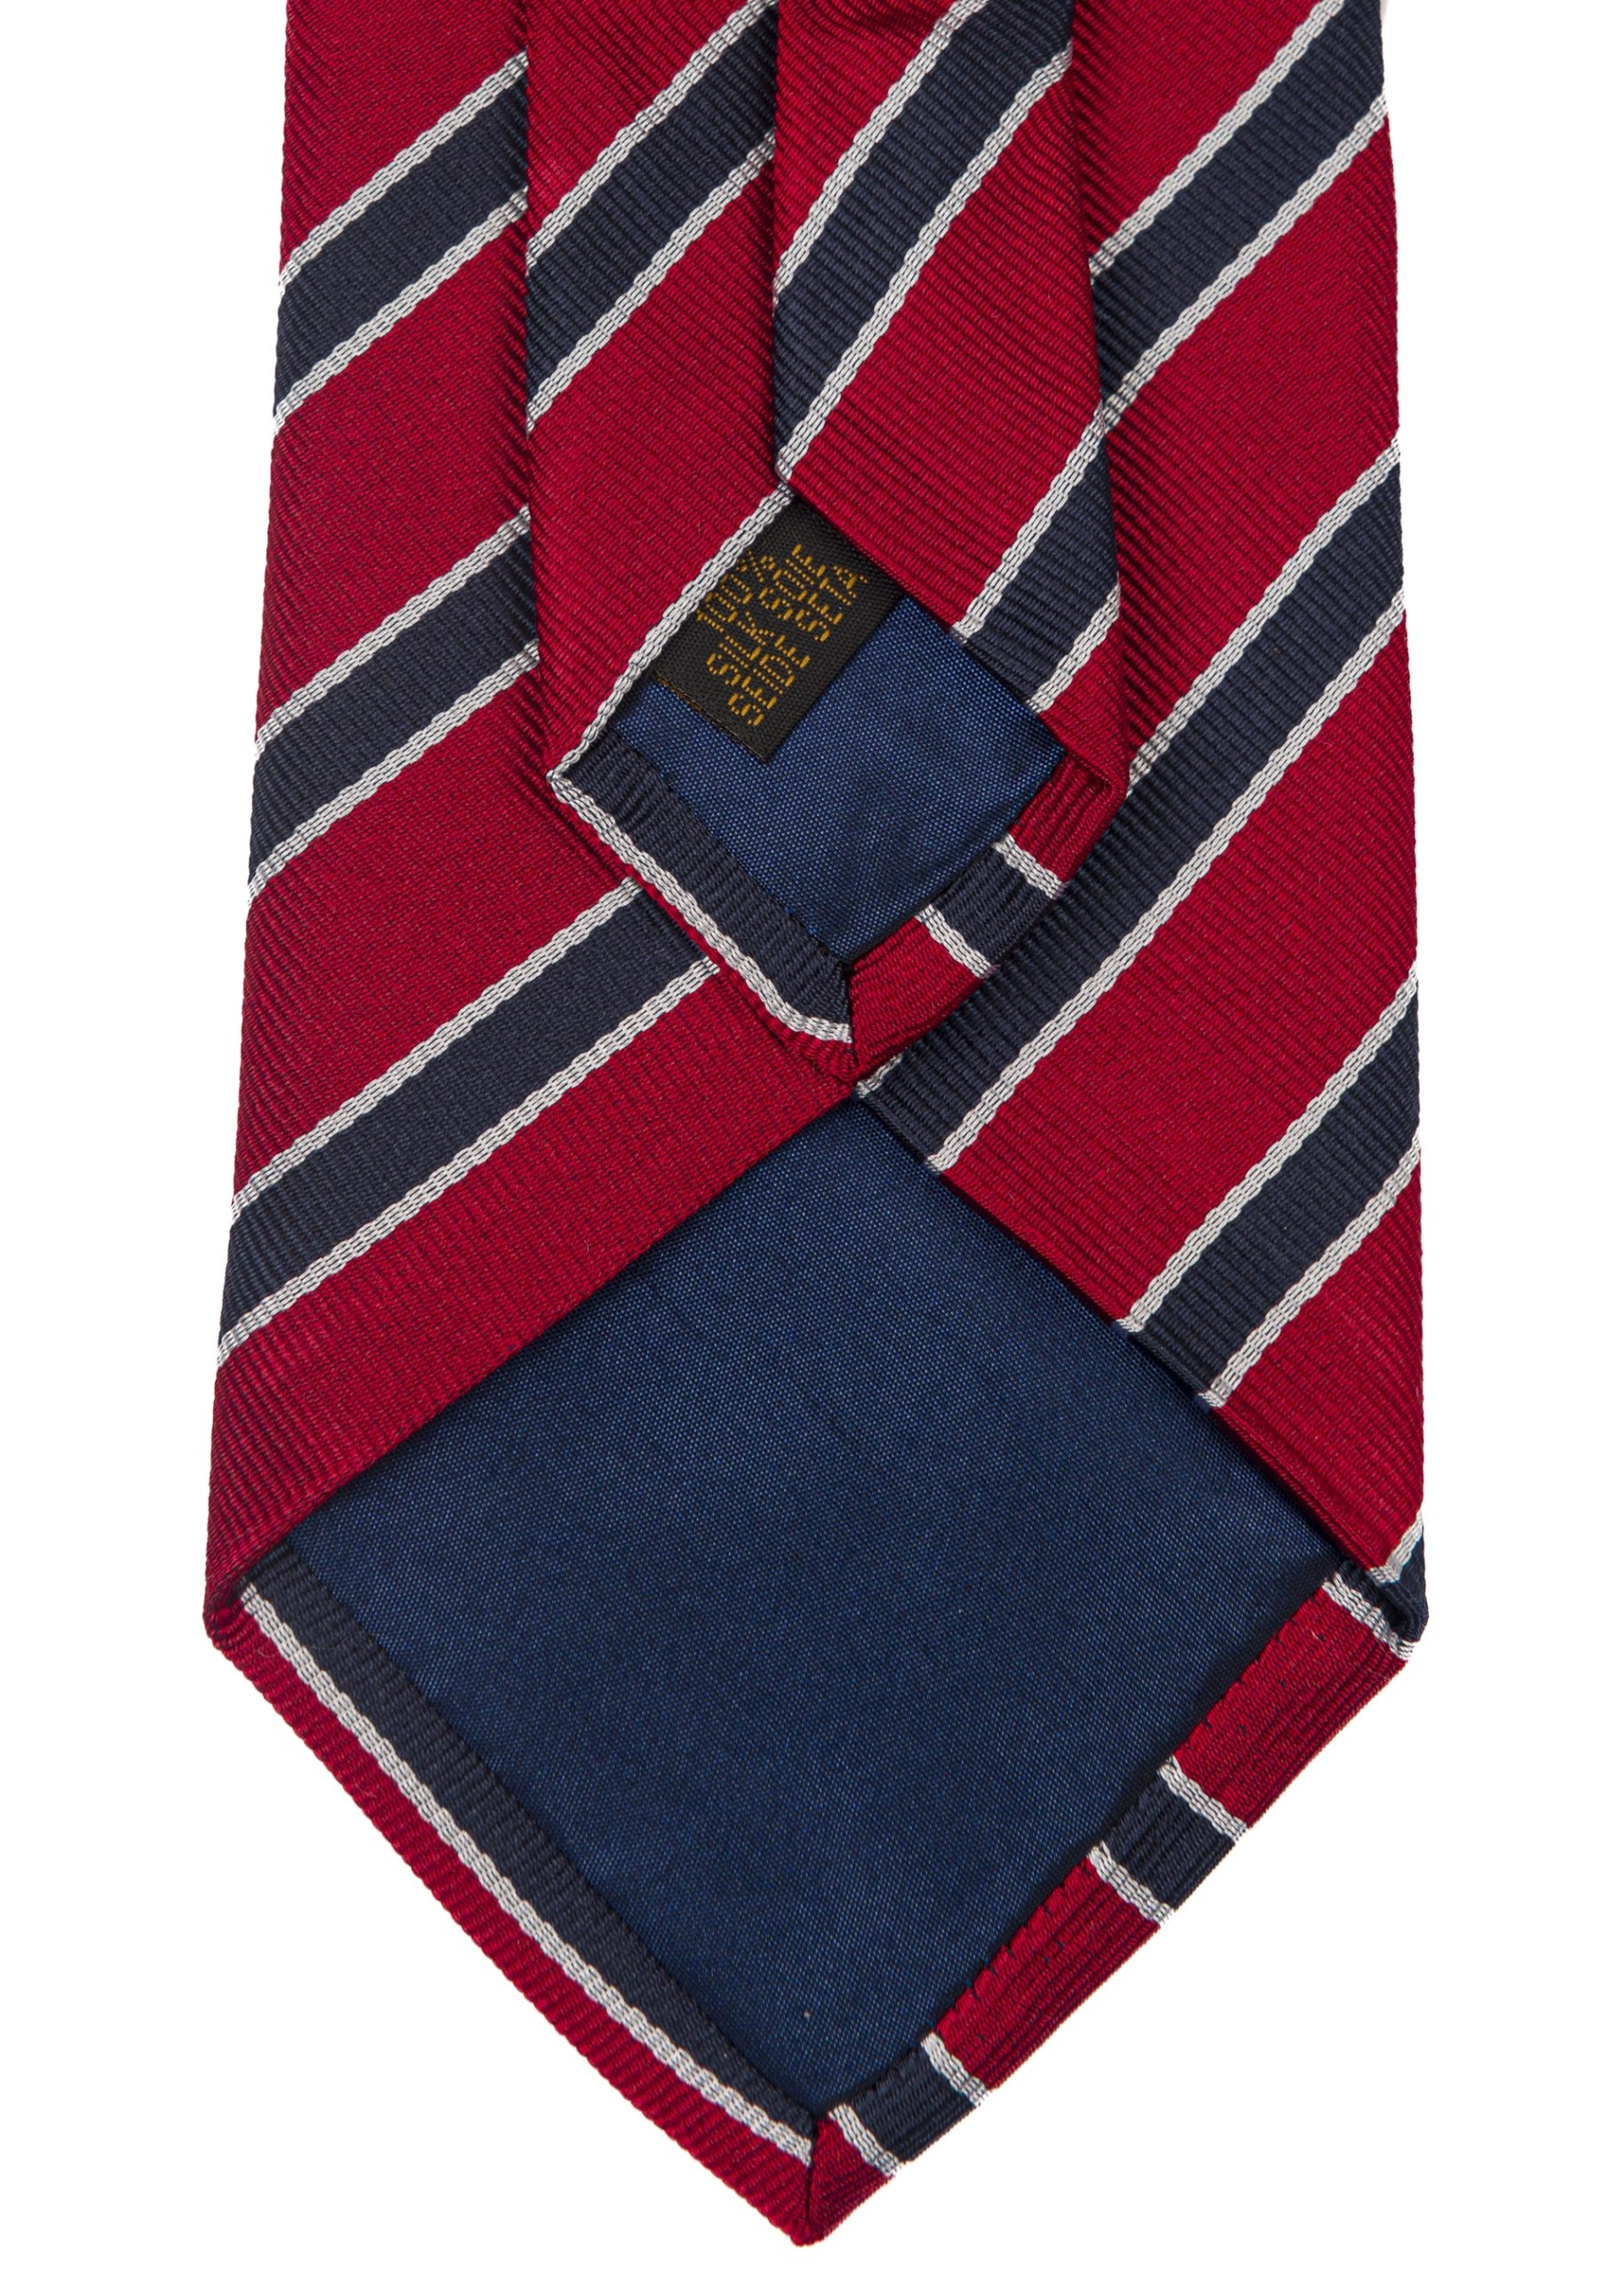 Roderick Charles men’s red block stripe tie